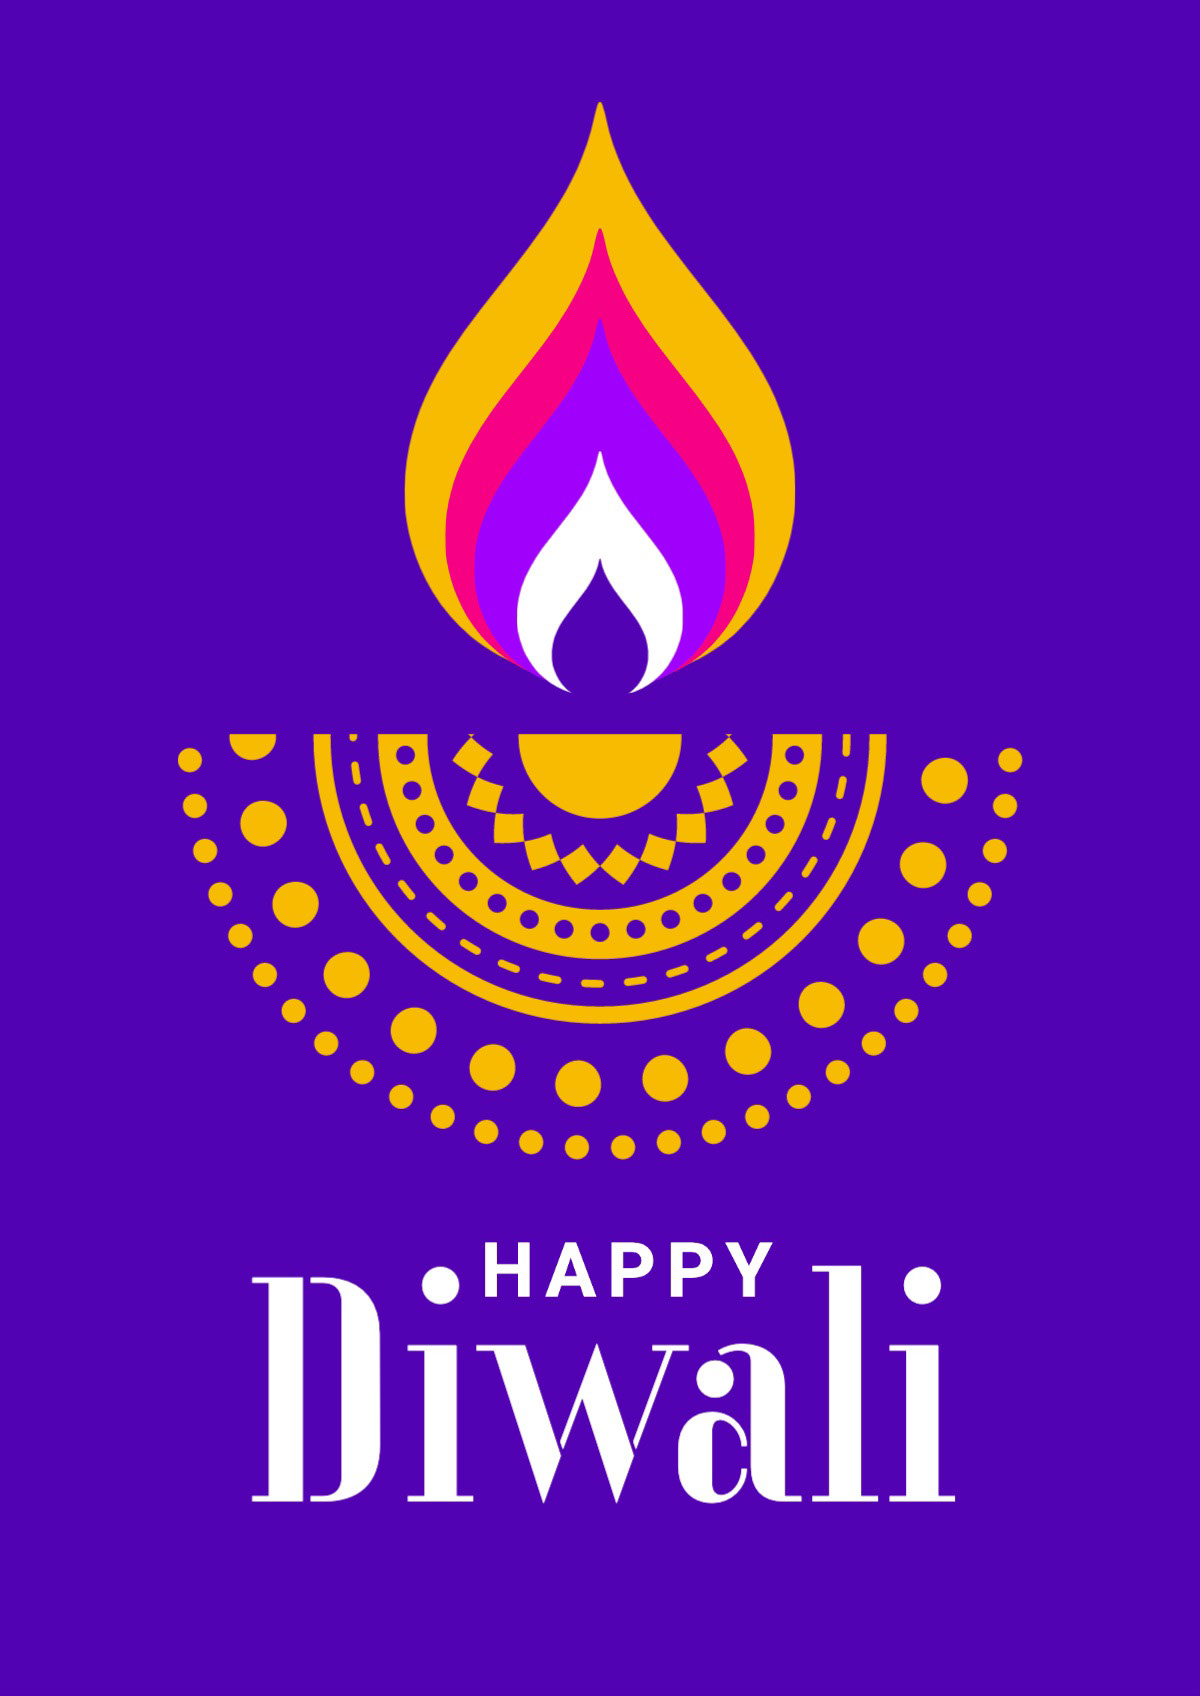 Free printable, customizable Diwali poster templates | Canva